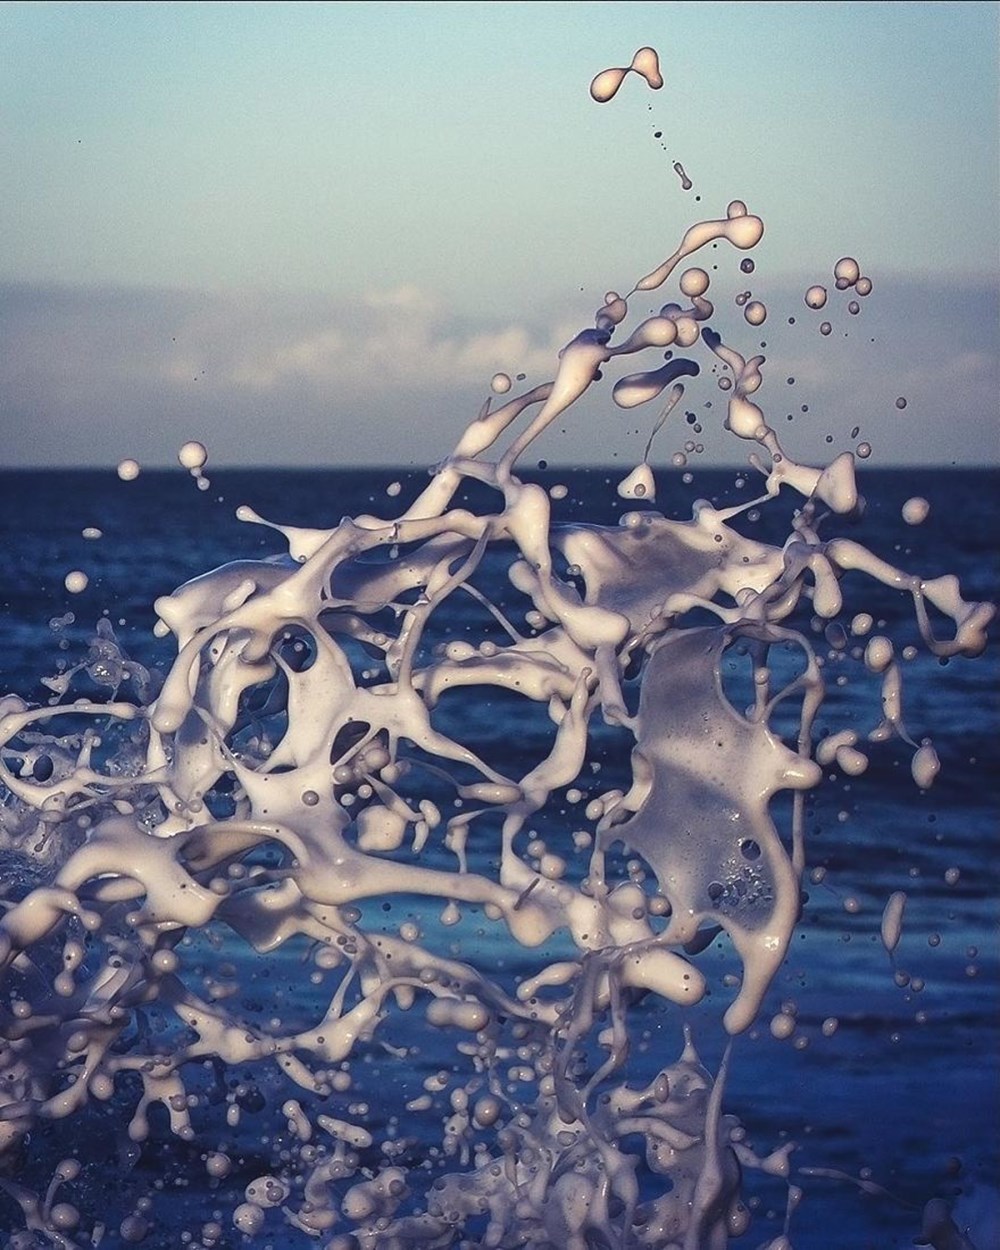 Вода без движения. Австралийский фотограф Мэтт Берджесс. Поток воды. Океан слёз. Вода картинки.